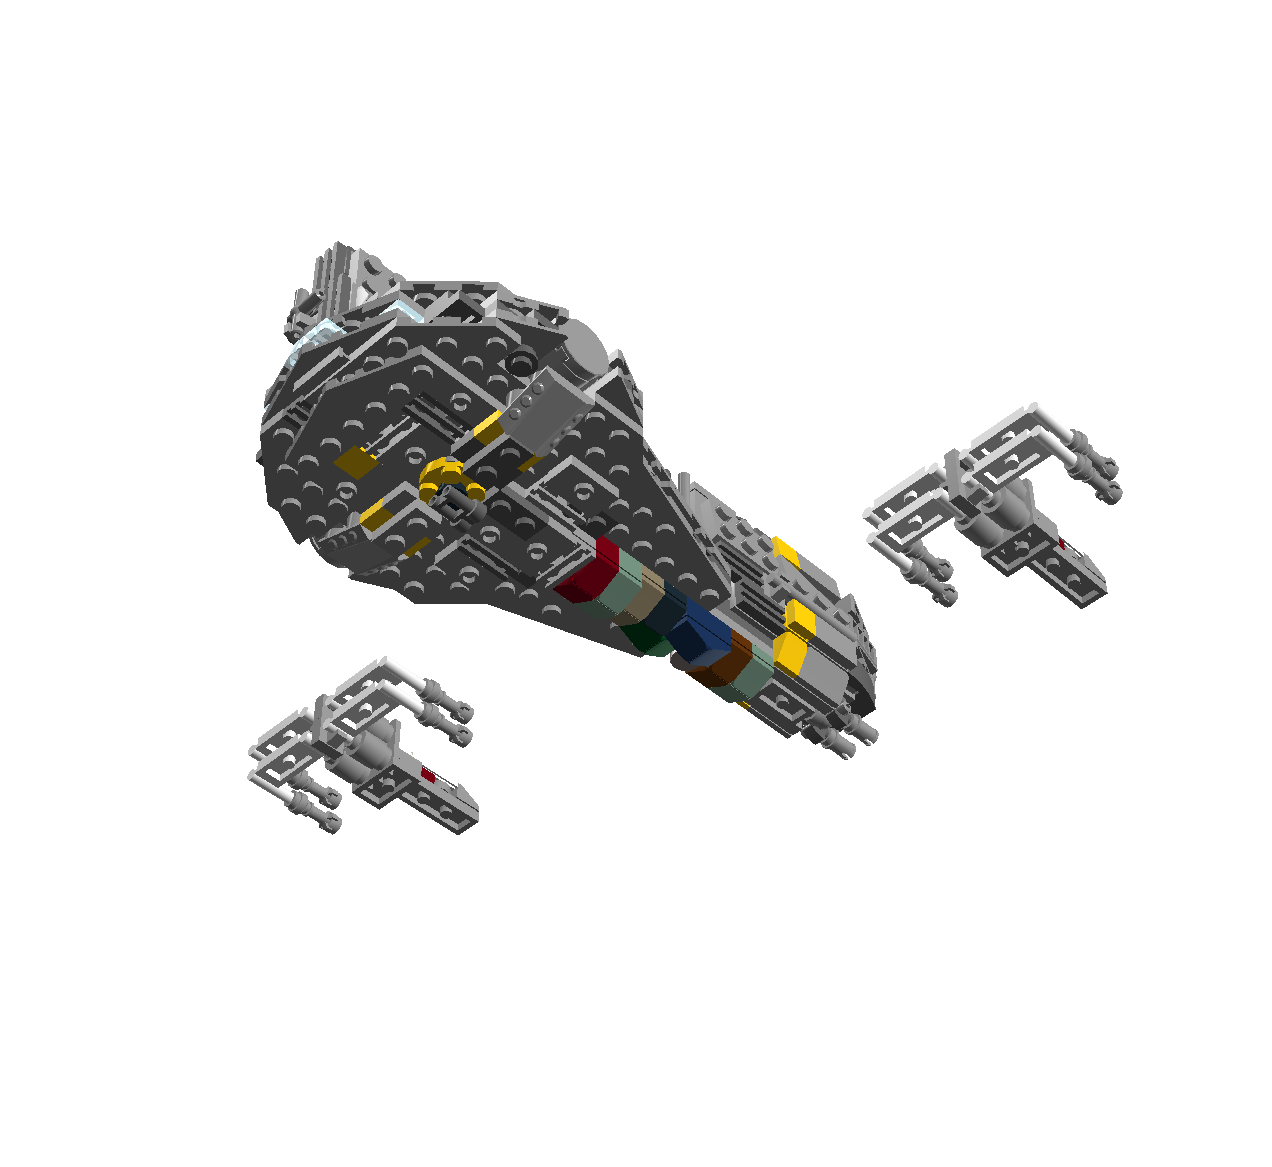 http://www.brickshelf.com/gallery/Ekae/Star-Wars-Ships/my-fleet/cargo_freighter_underside.png